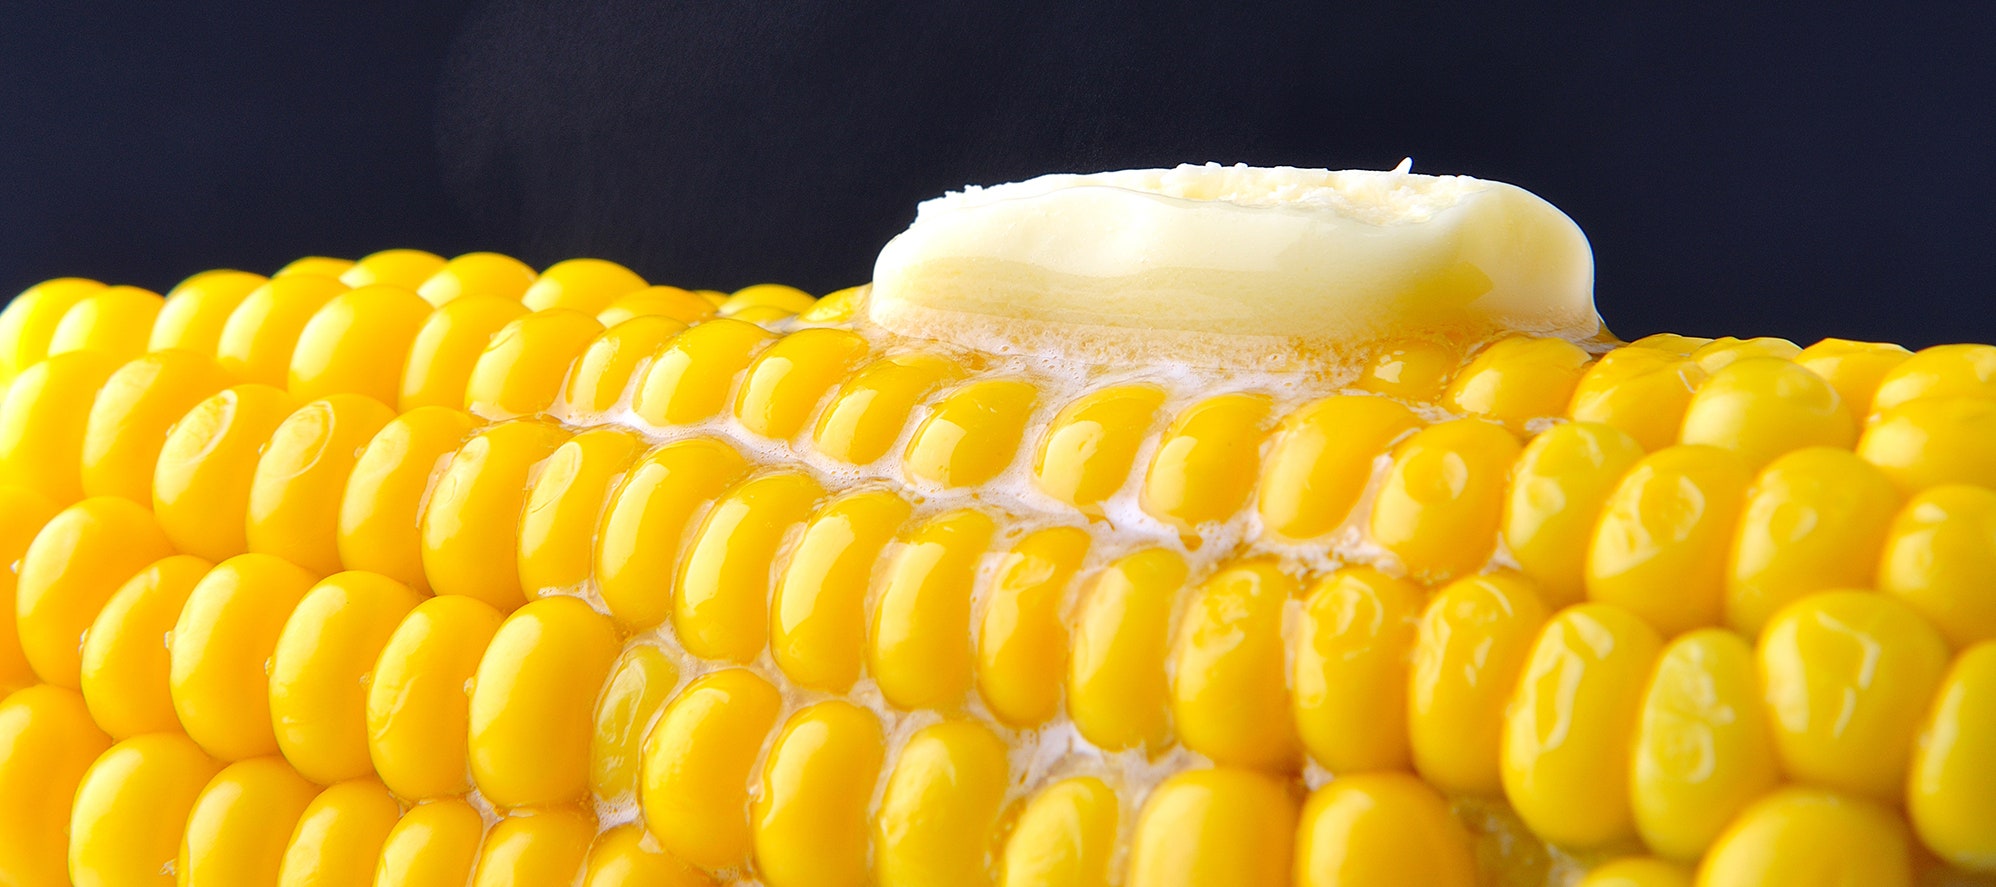 Detail Images Of Corn Nomer 7